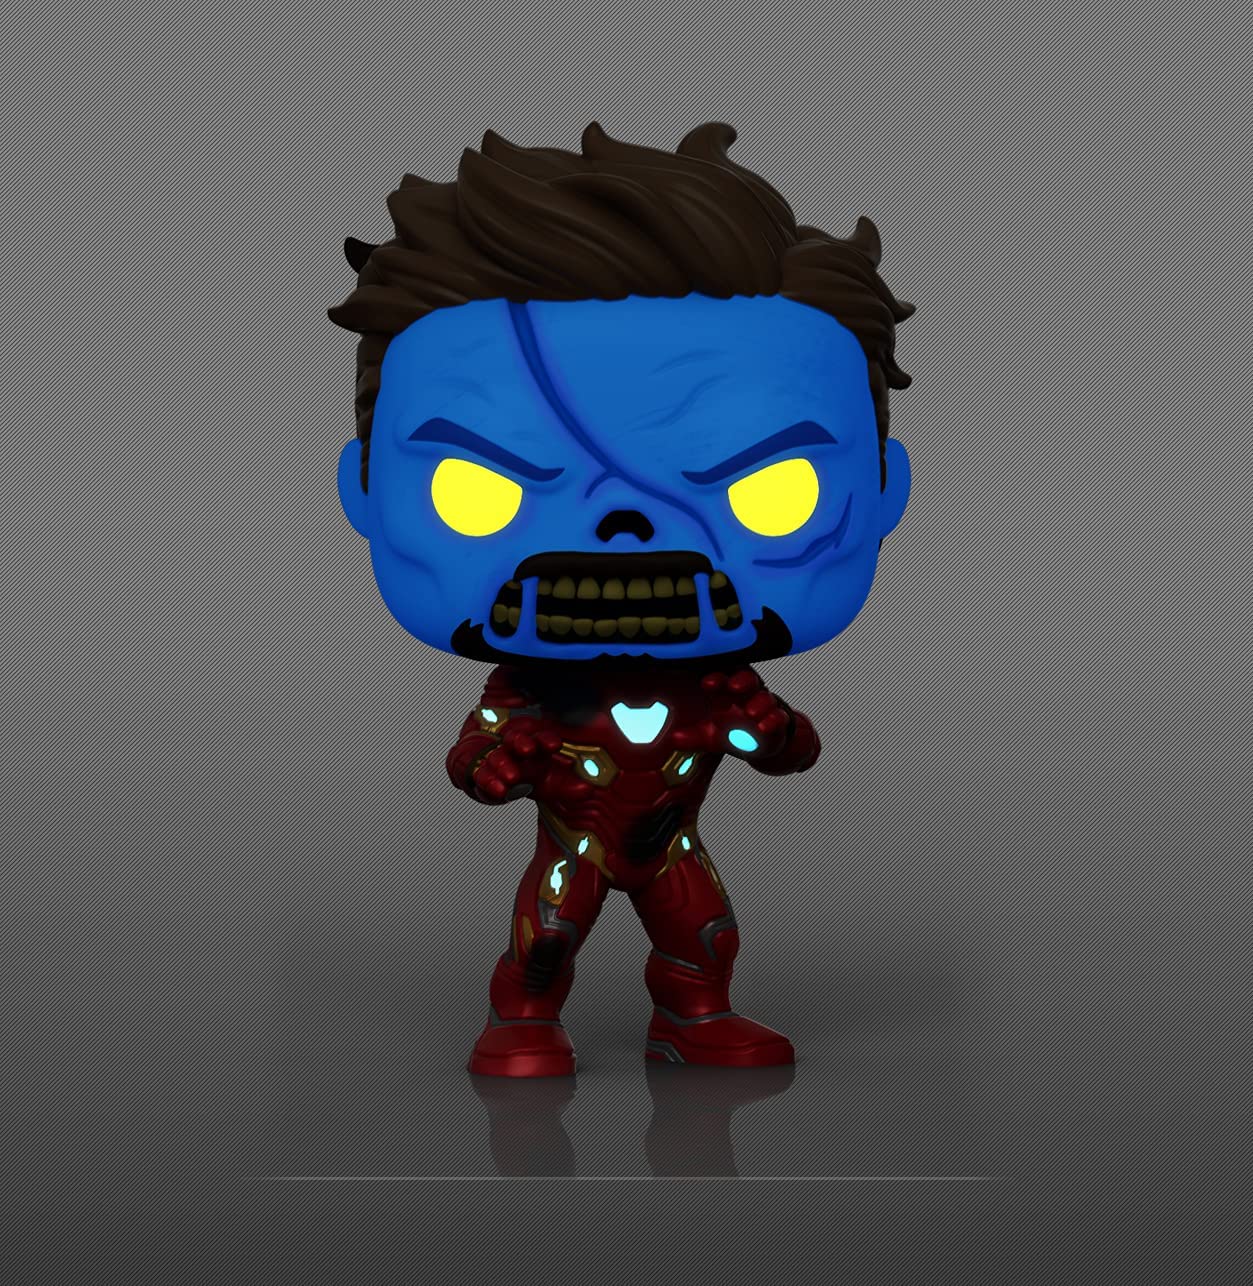 Funko Pop Marvel: What If? - Zombie Iron Man (Glow In The Dark)